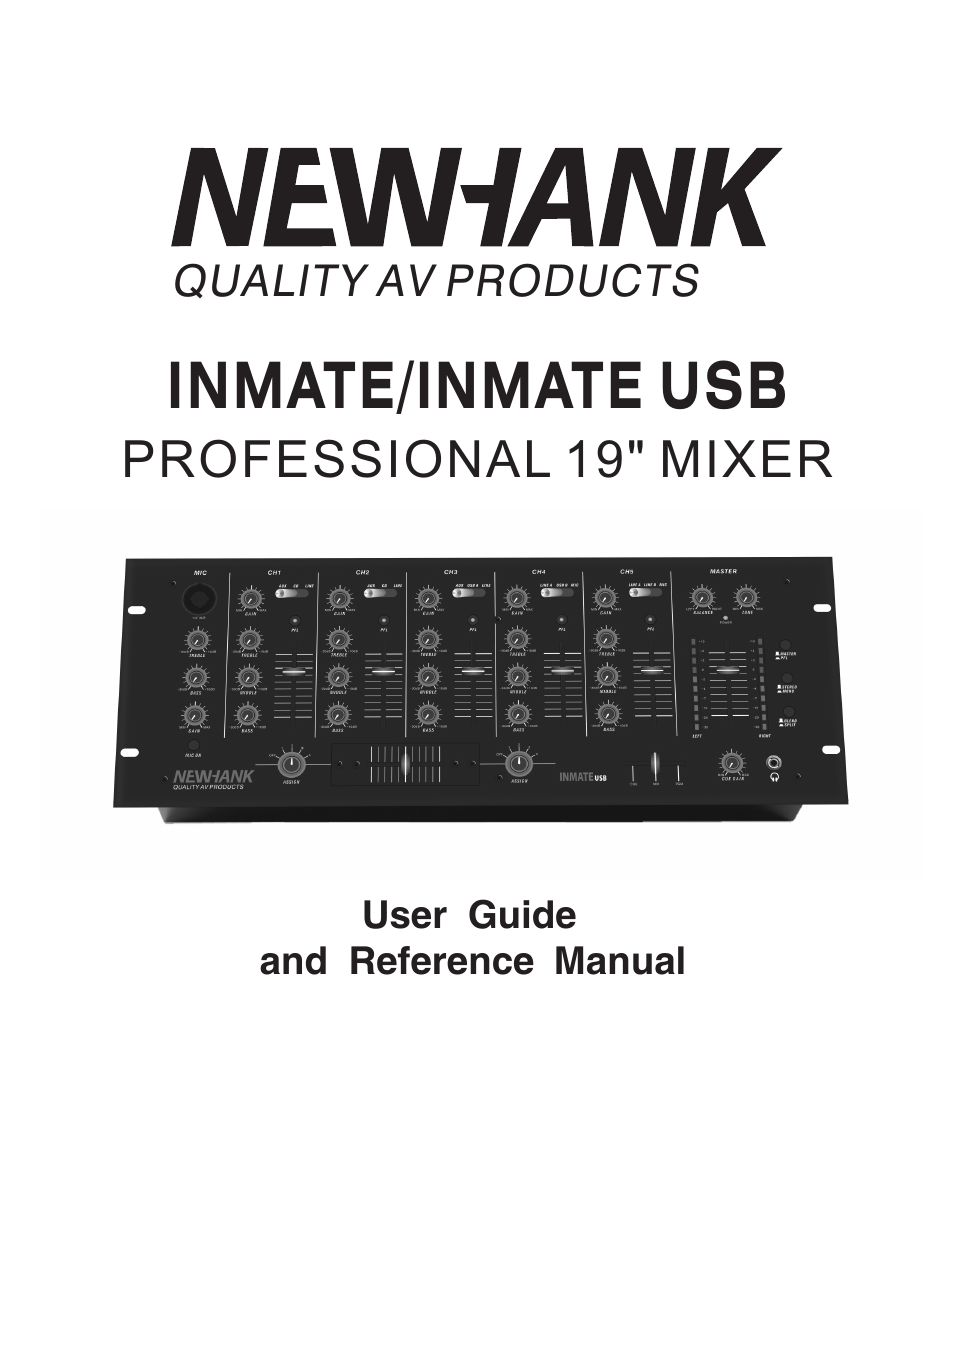 Inmate USB